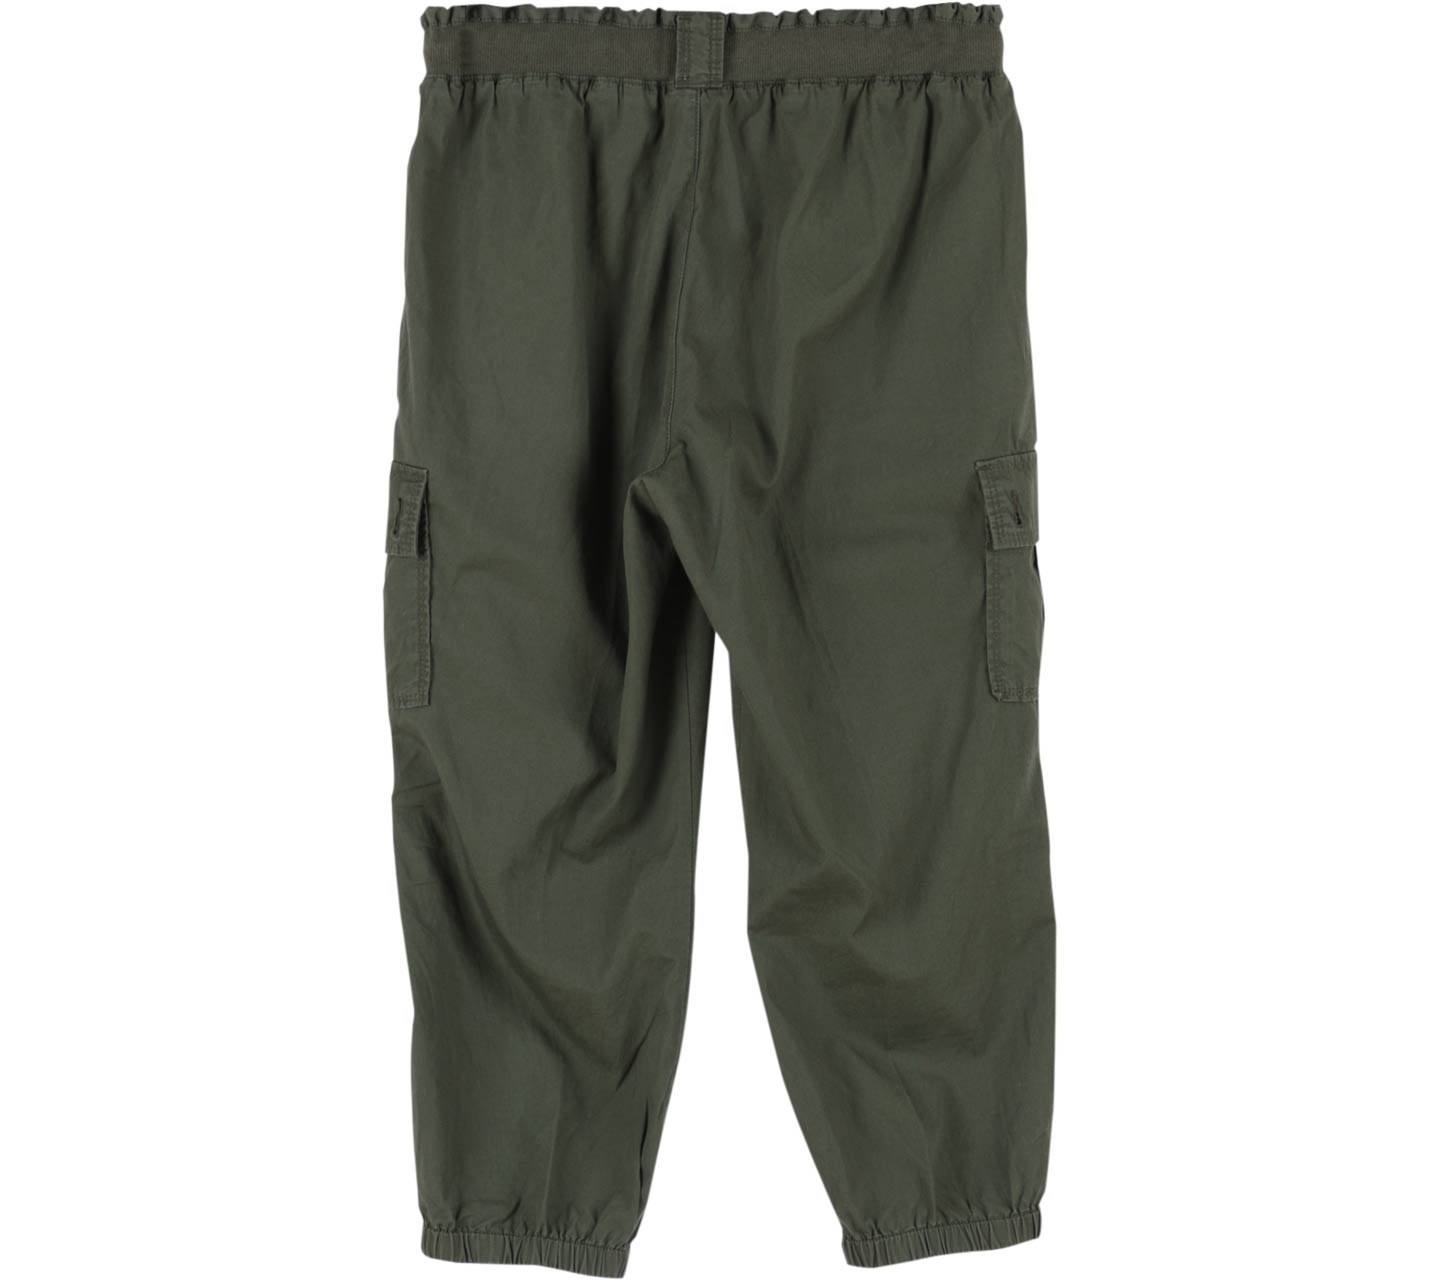 UNIQLO Green Army Pocket Jogger Pants